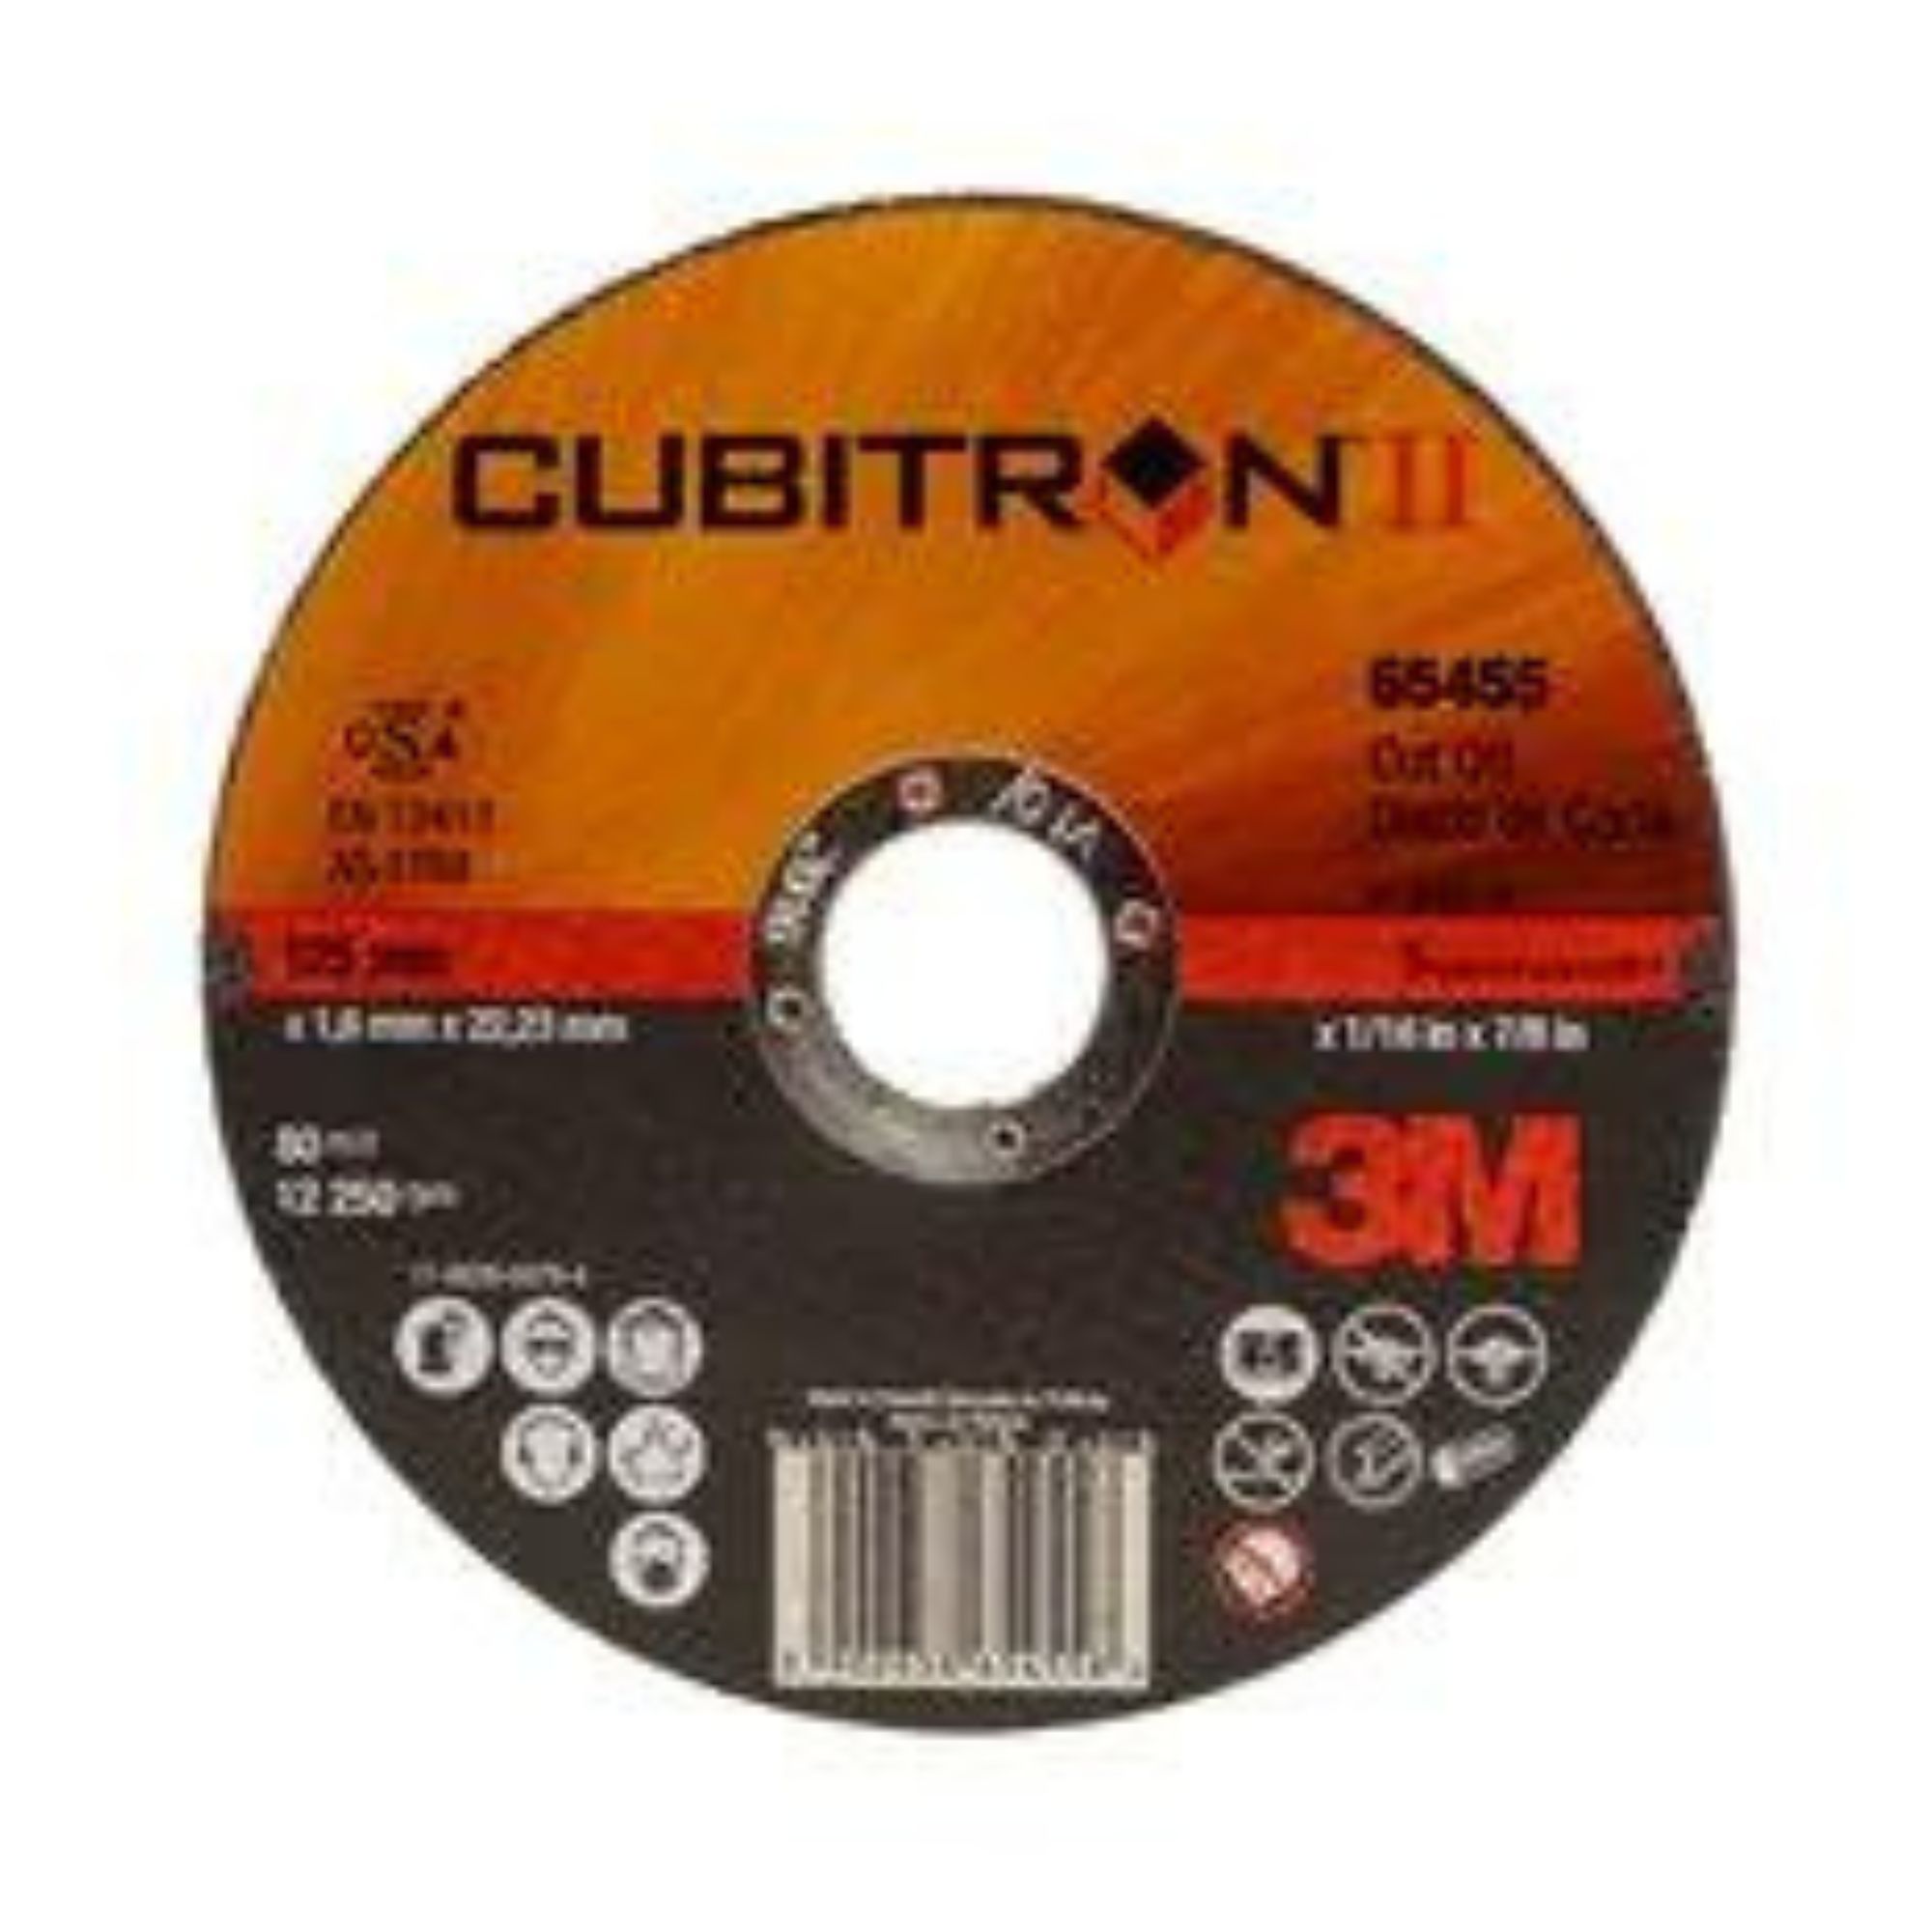 Disco de corte plano Cubitron II 3M